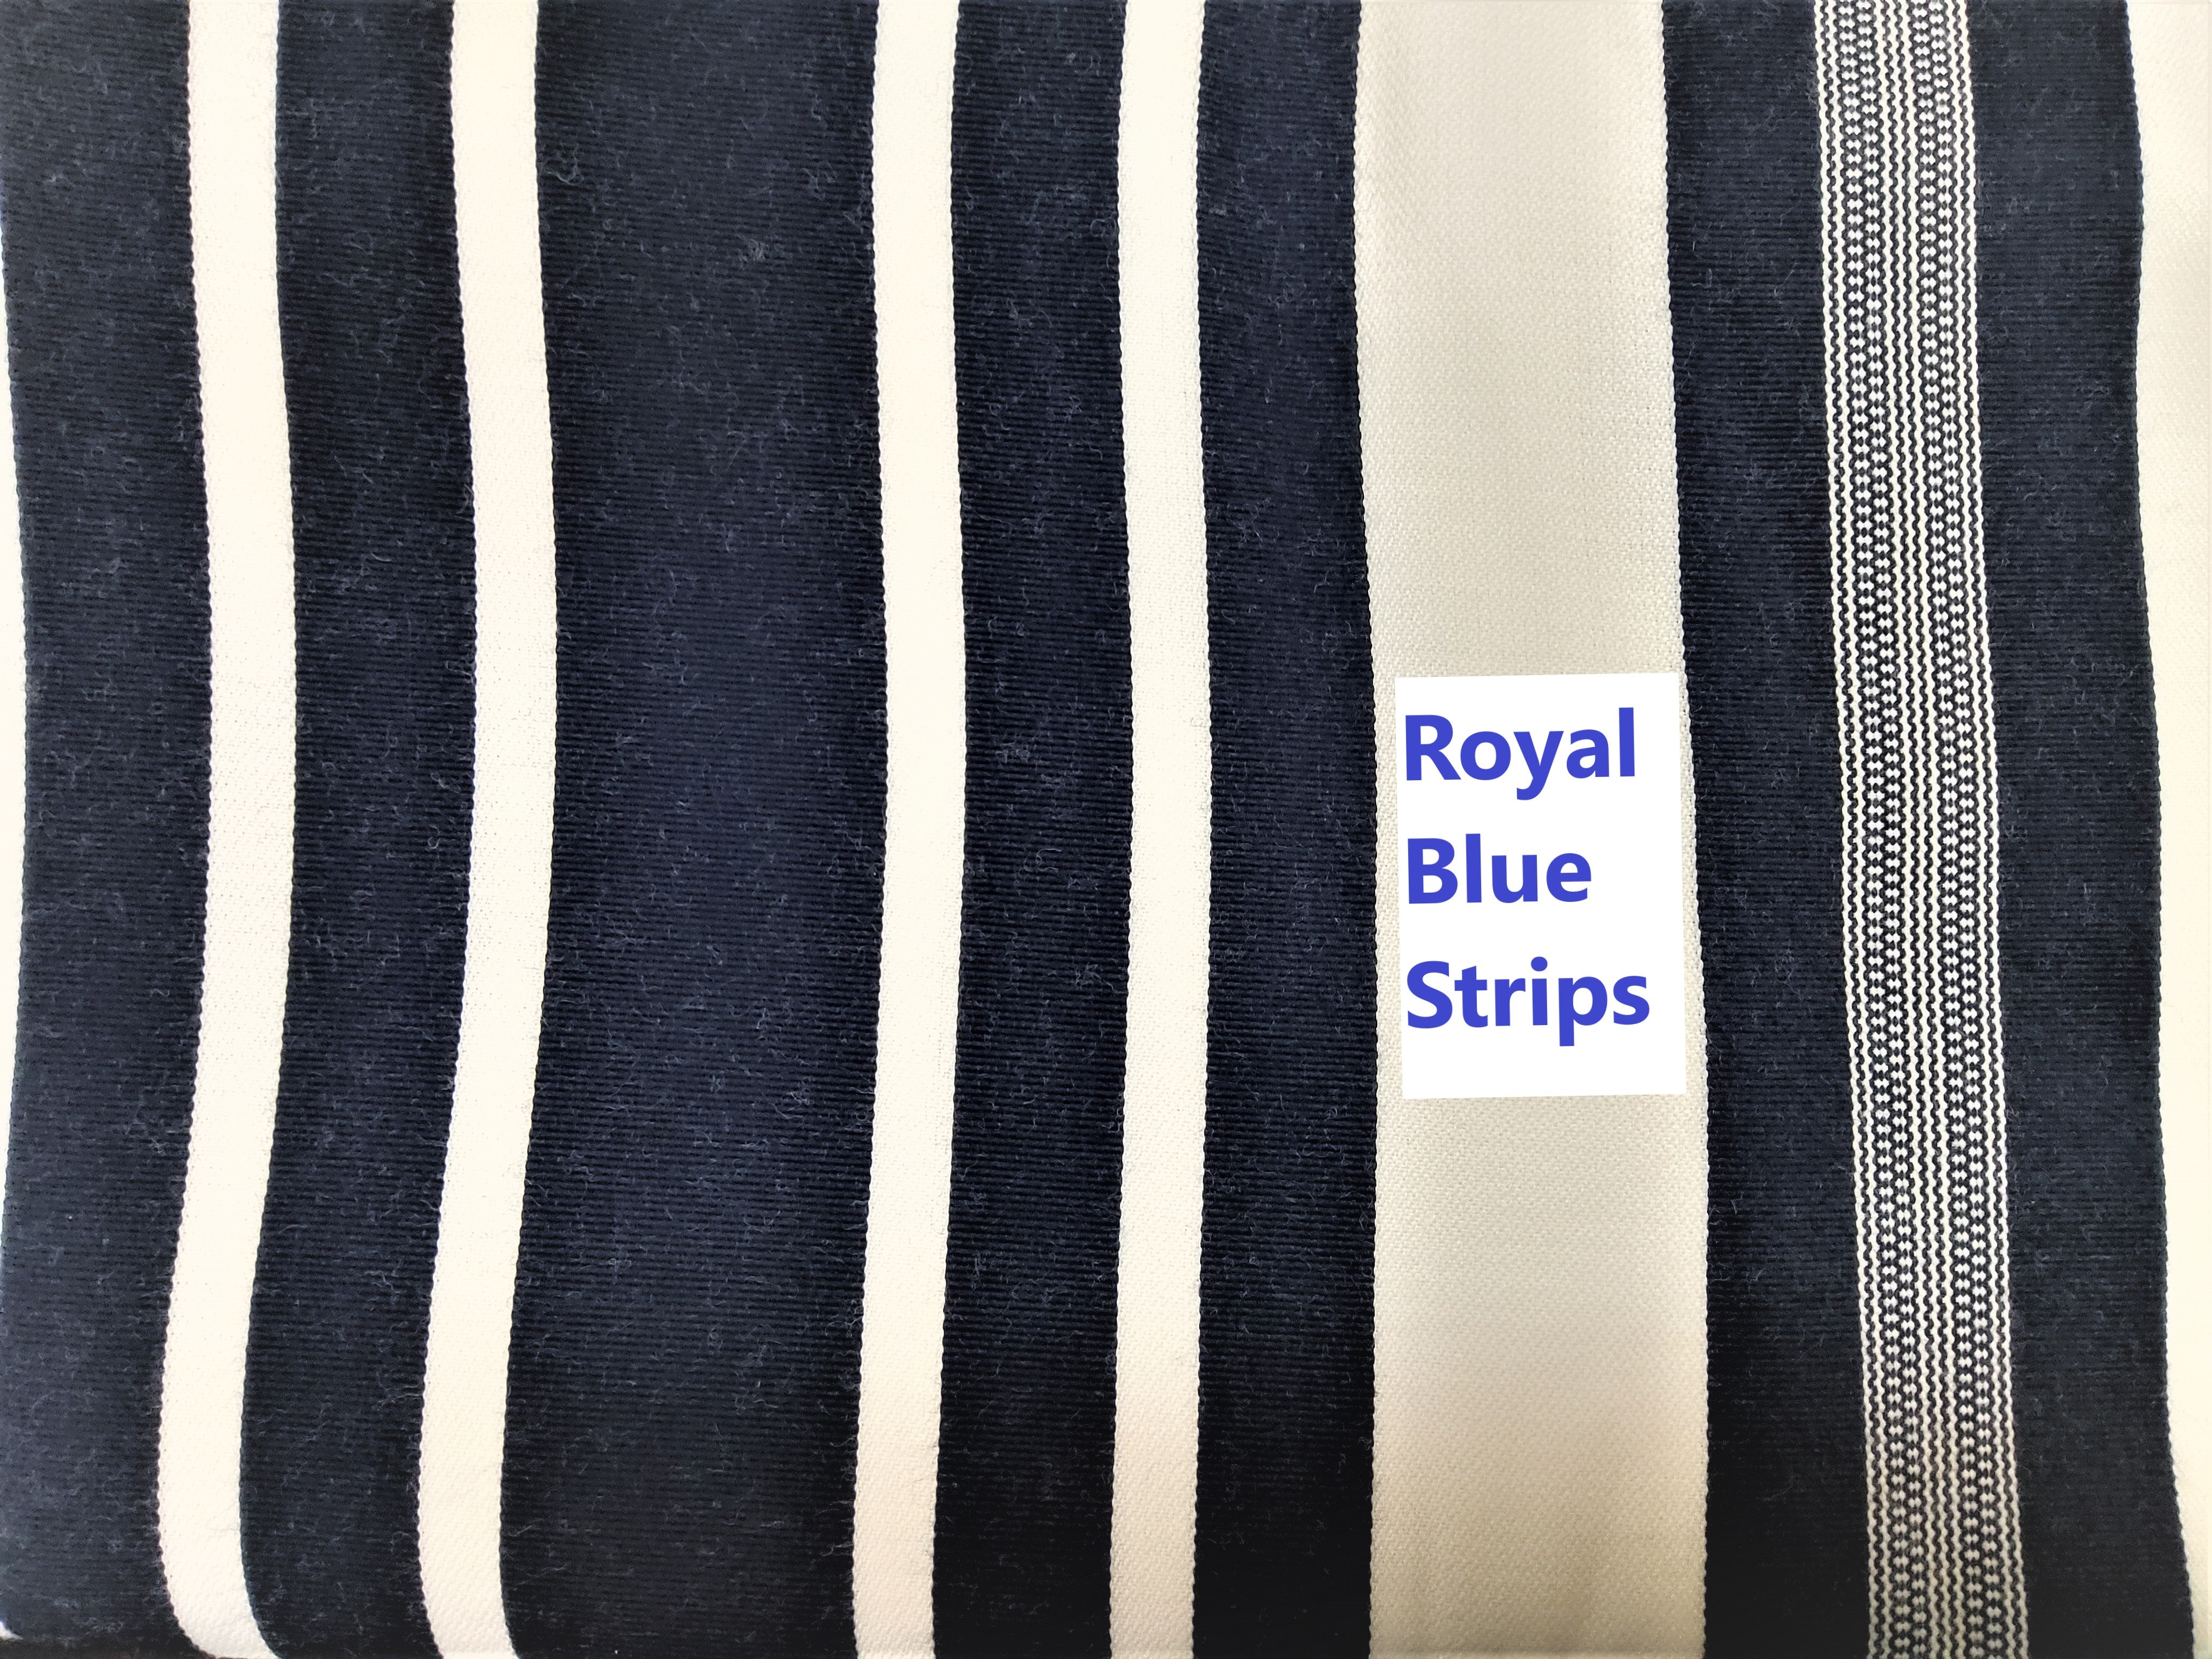 Tallis with Royal Blue Stripes